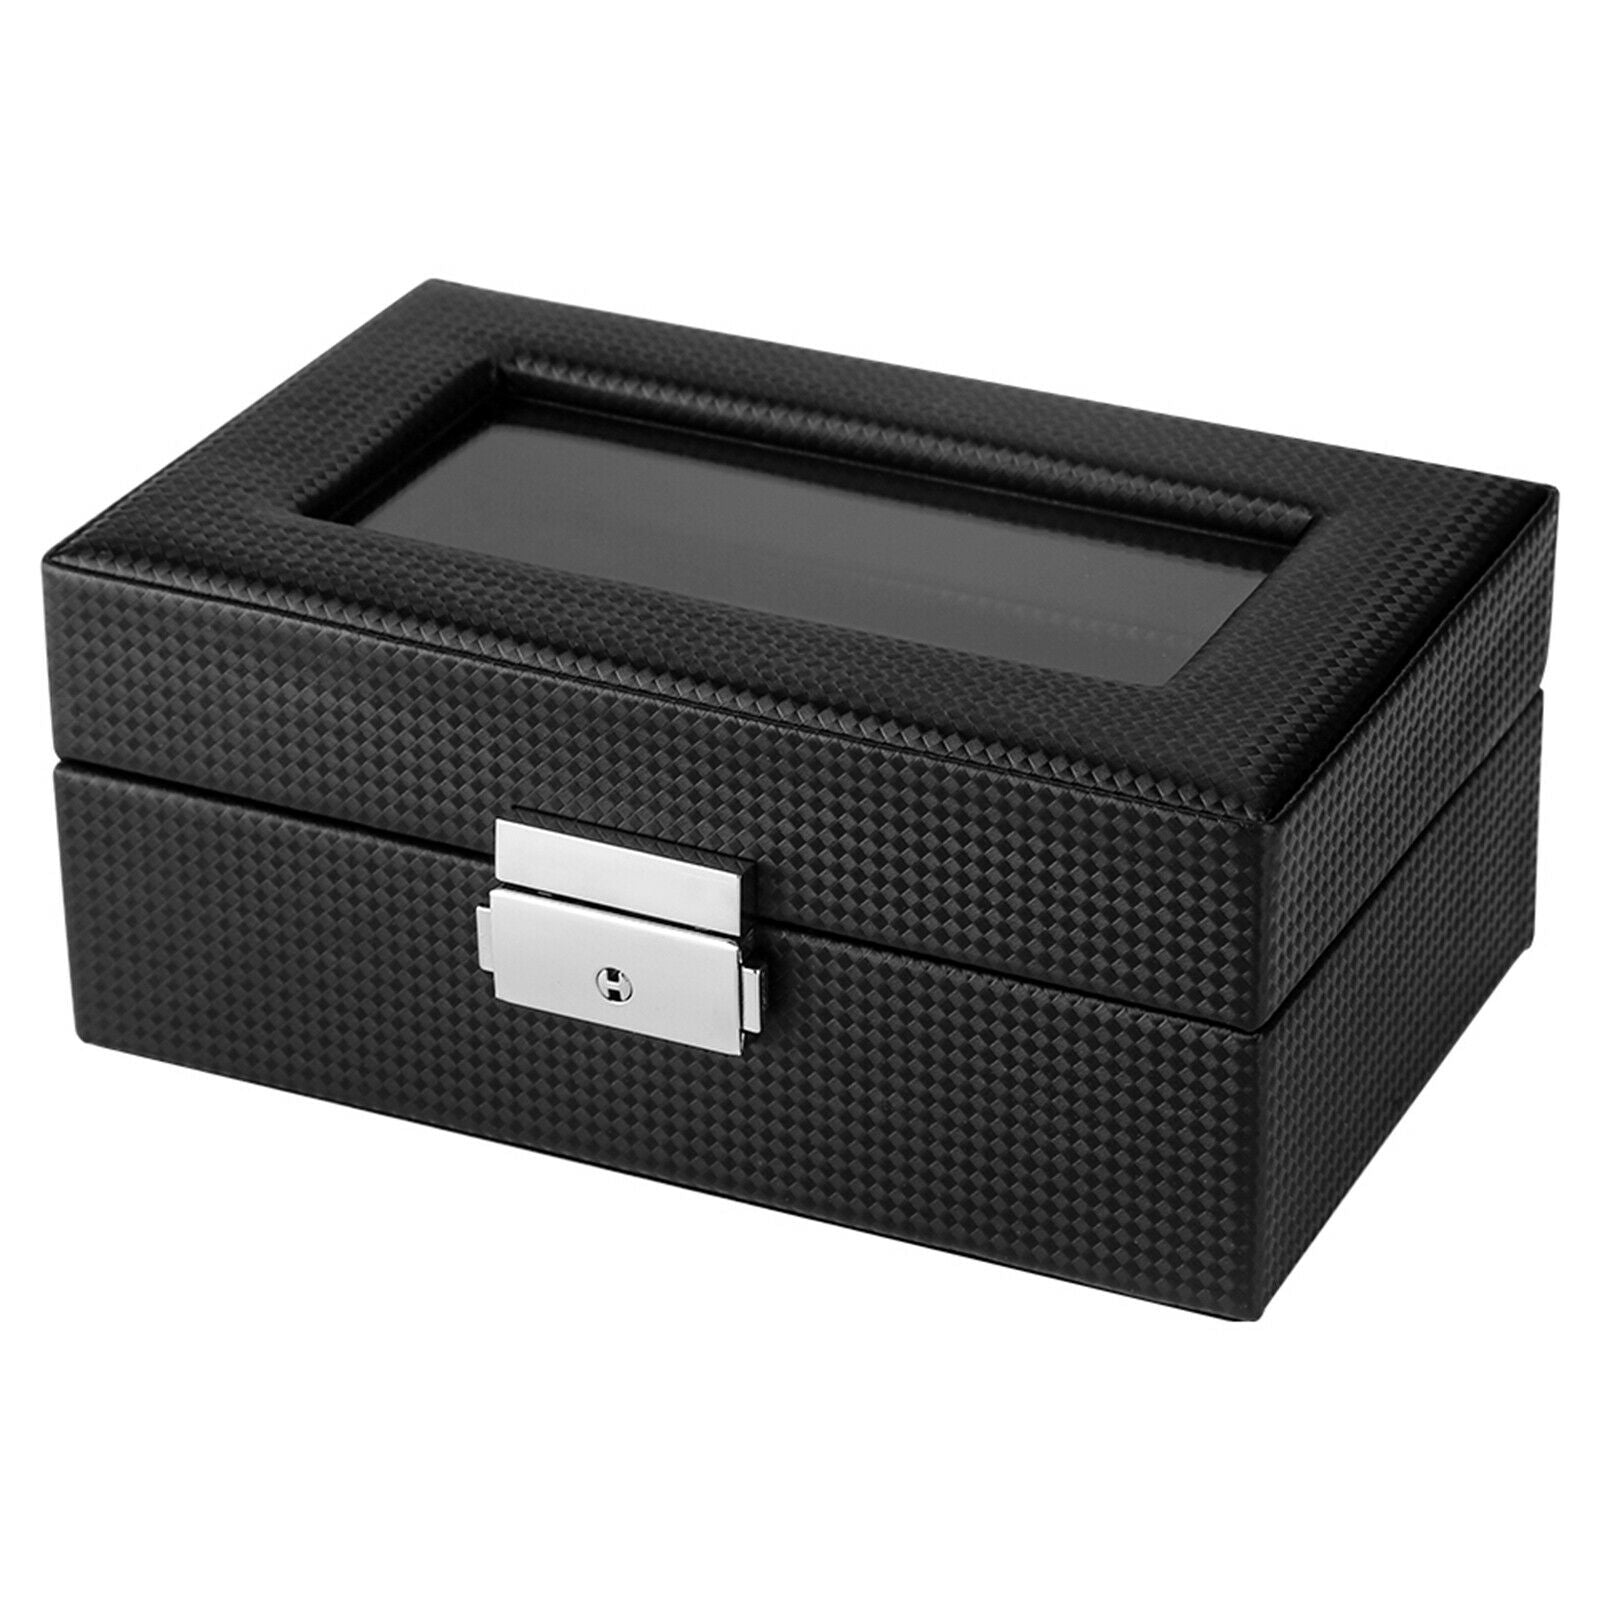 Watch Box Luxury Carbon Fiber Collection Organizer Holder for Smart Watches